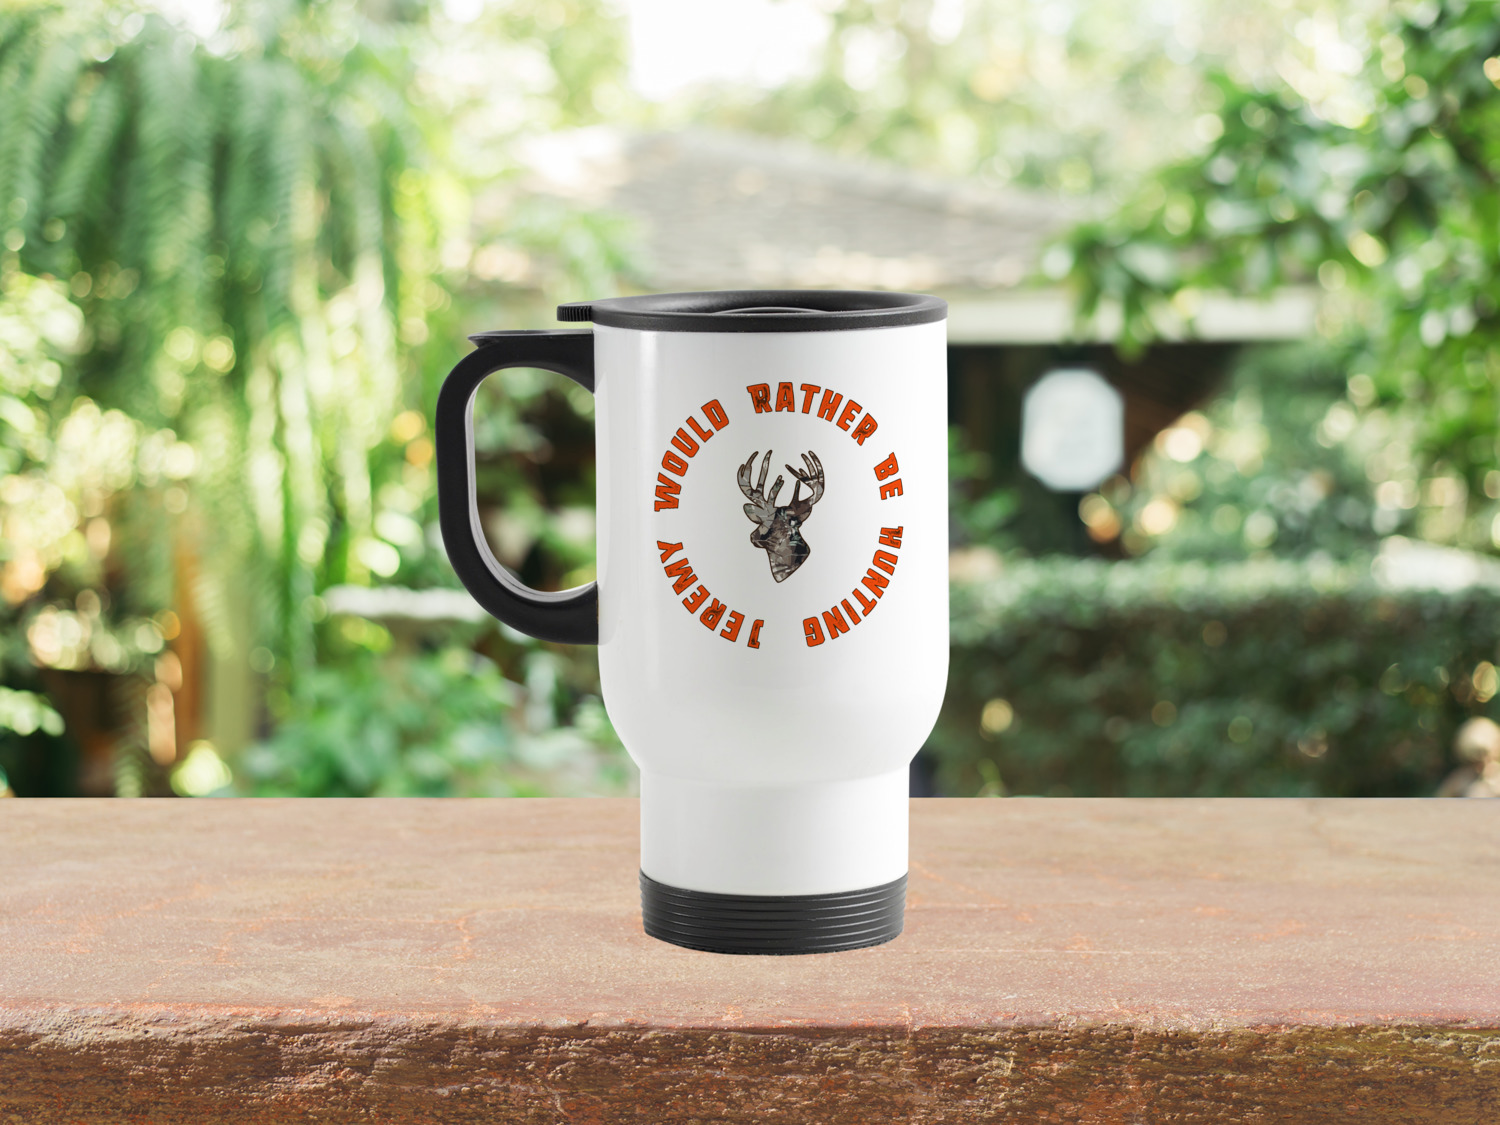 Hunting Camo Design Custom Coffee Mug